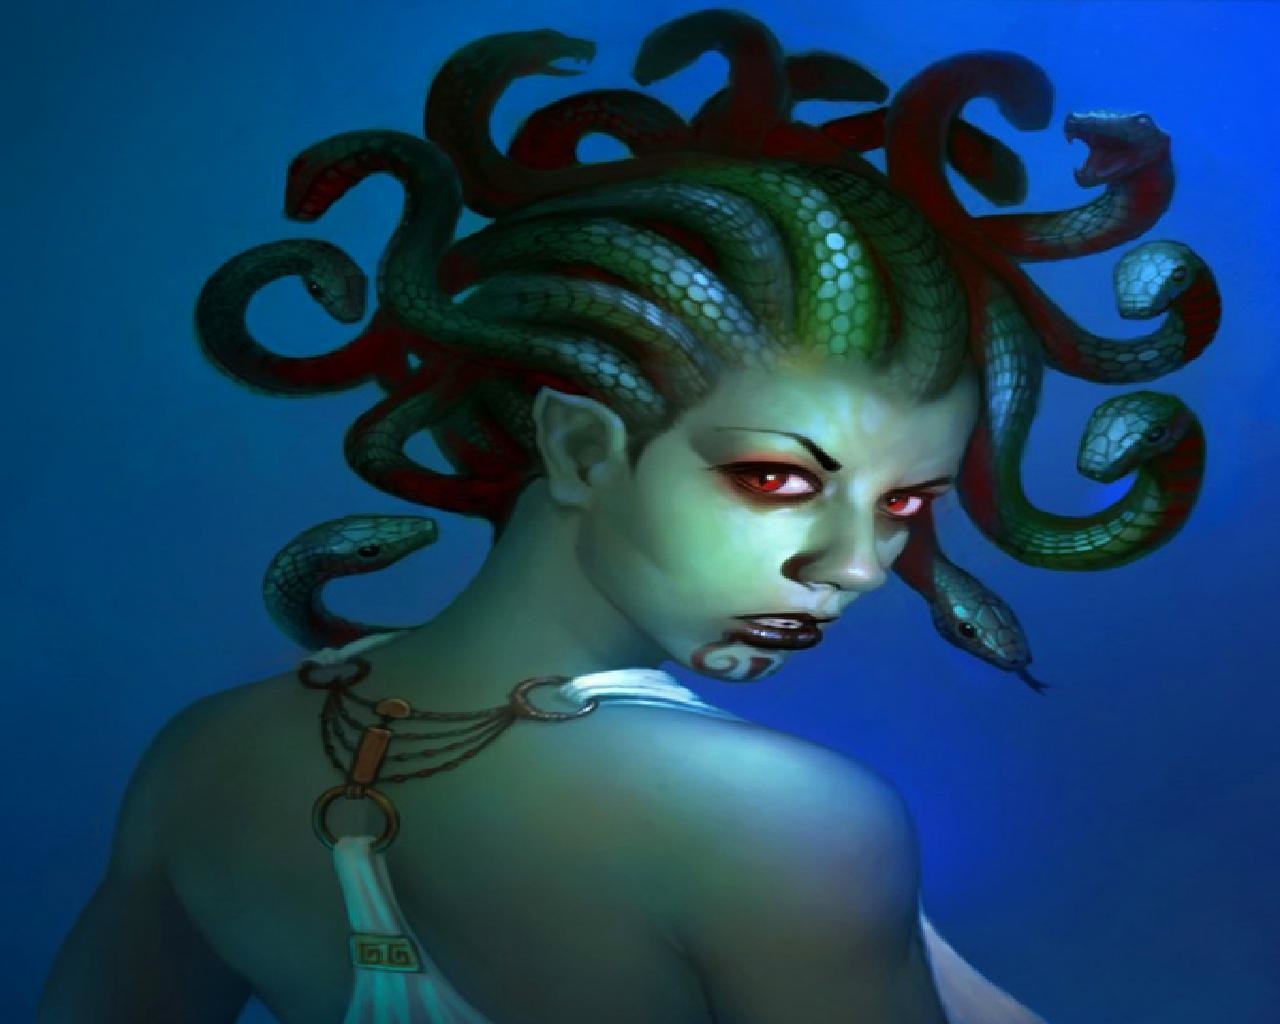 Fantasy Medusa Image. 